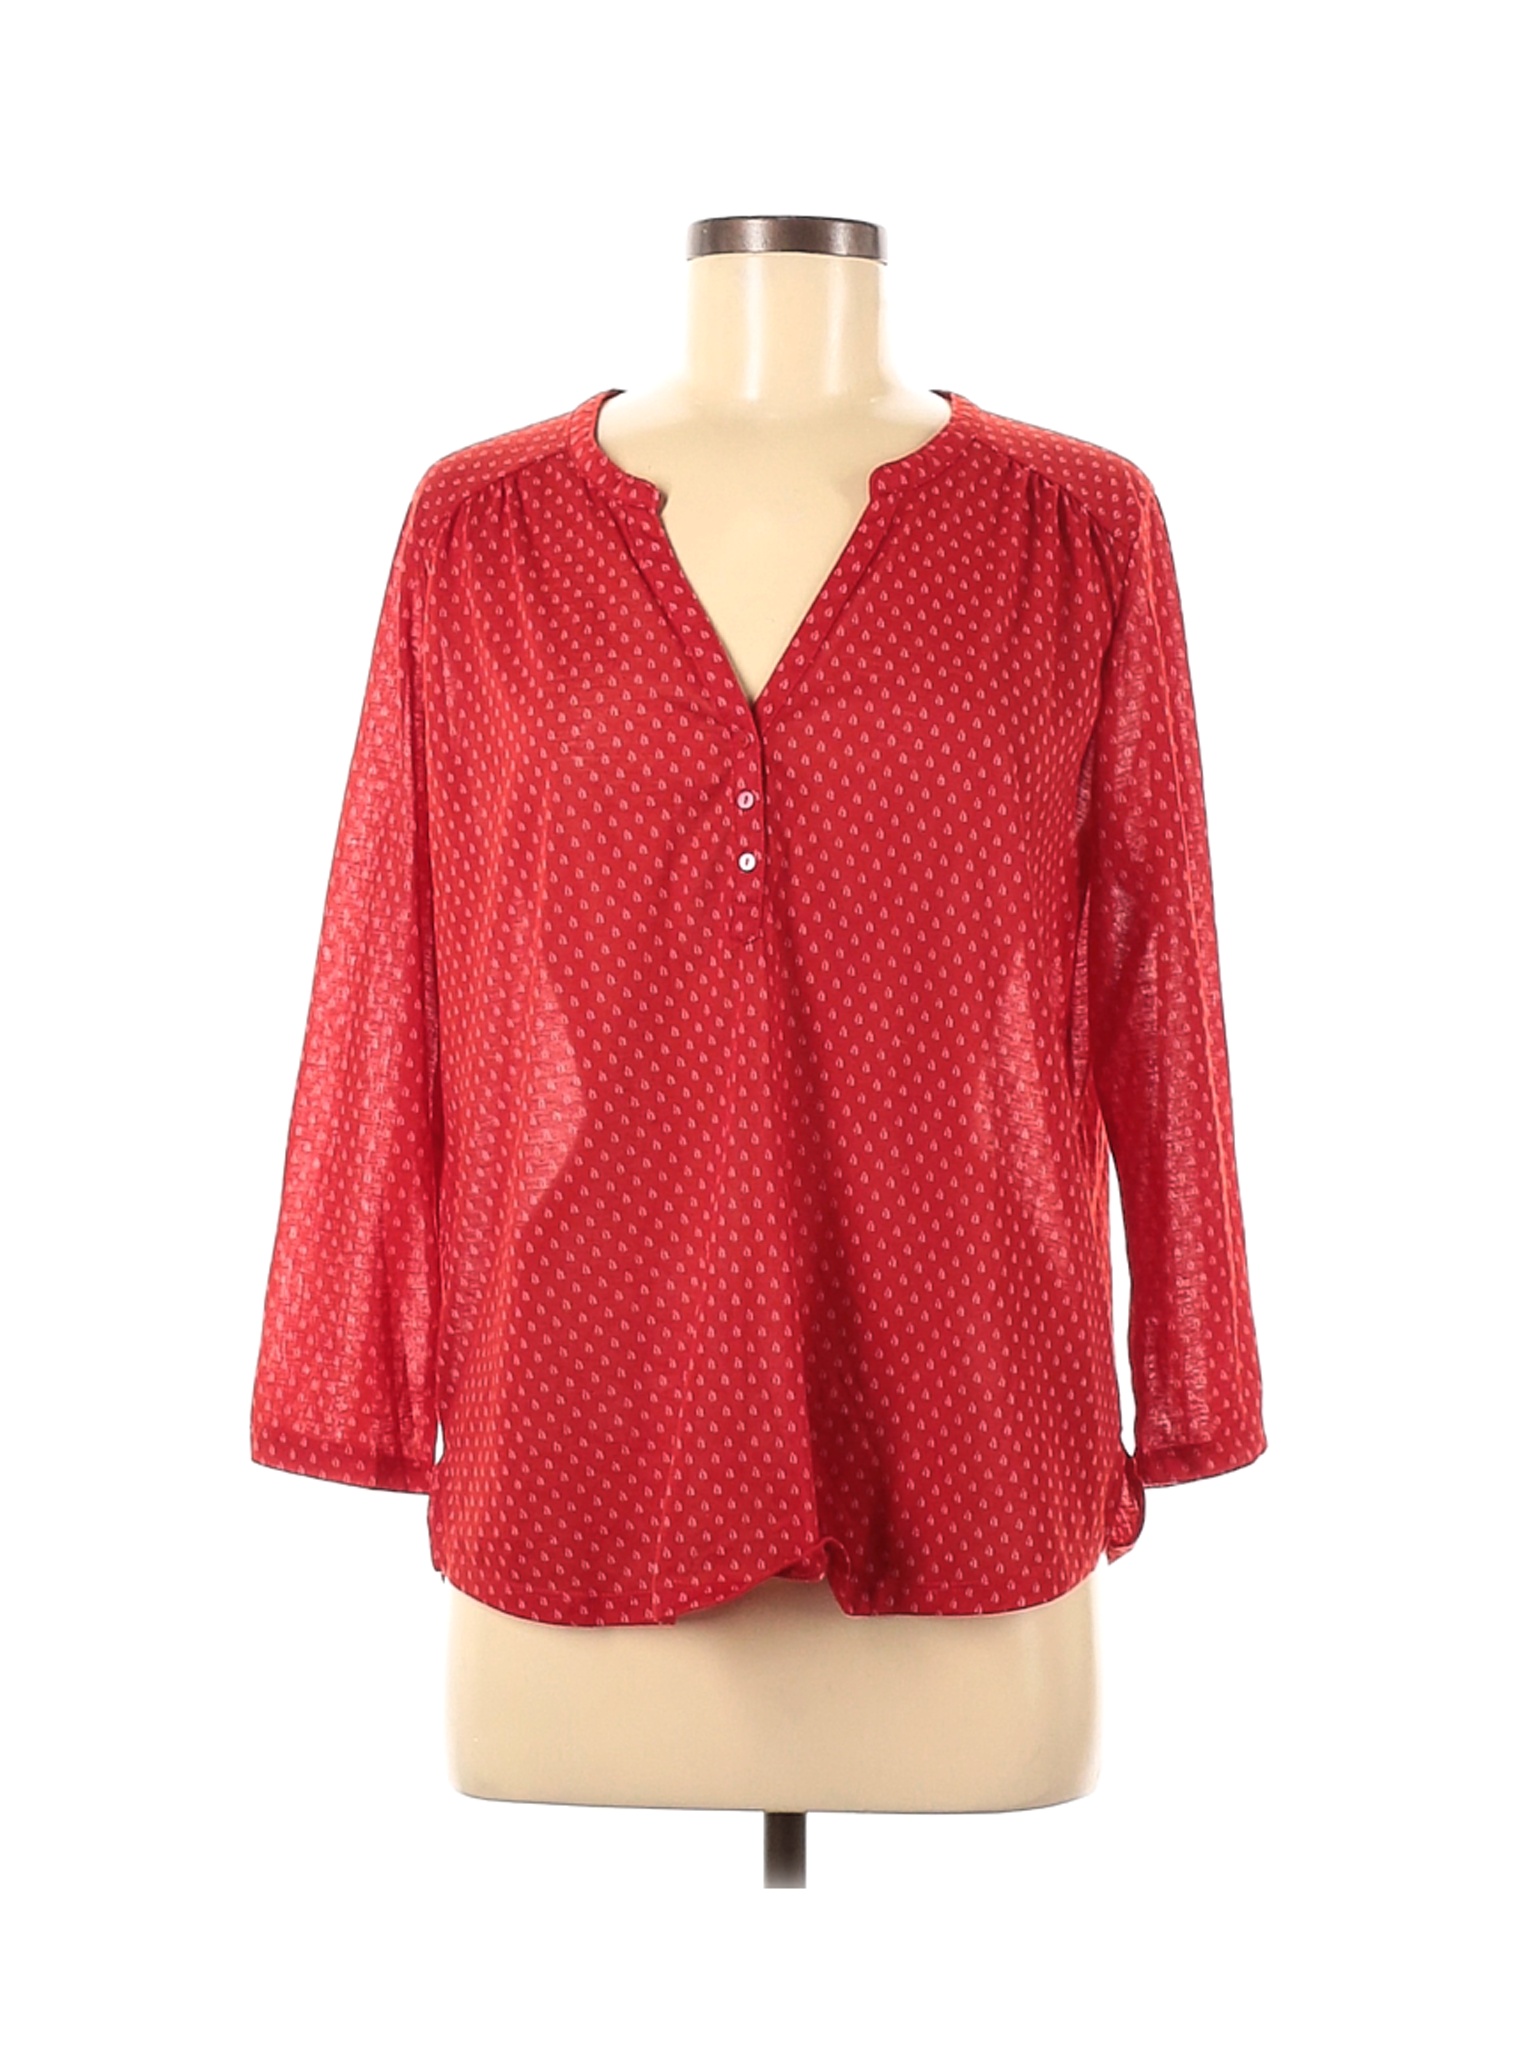 H&M Women Red Long Sleeve Blouse M | eBay